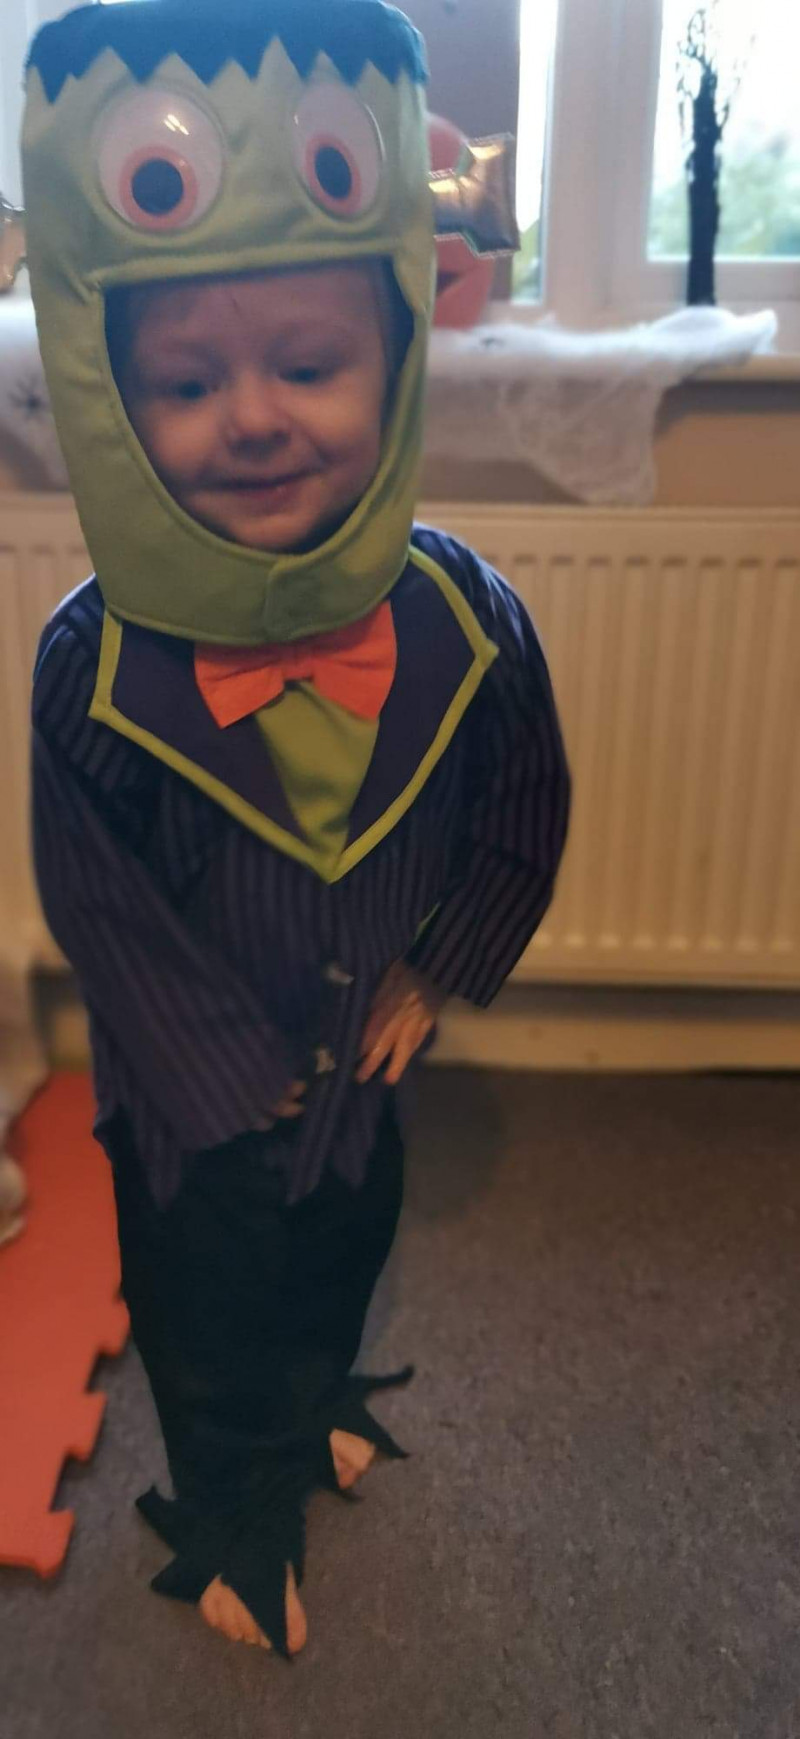 Image for Owen age 1 dressed as Frankenstein